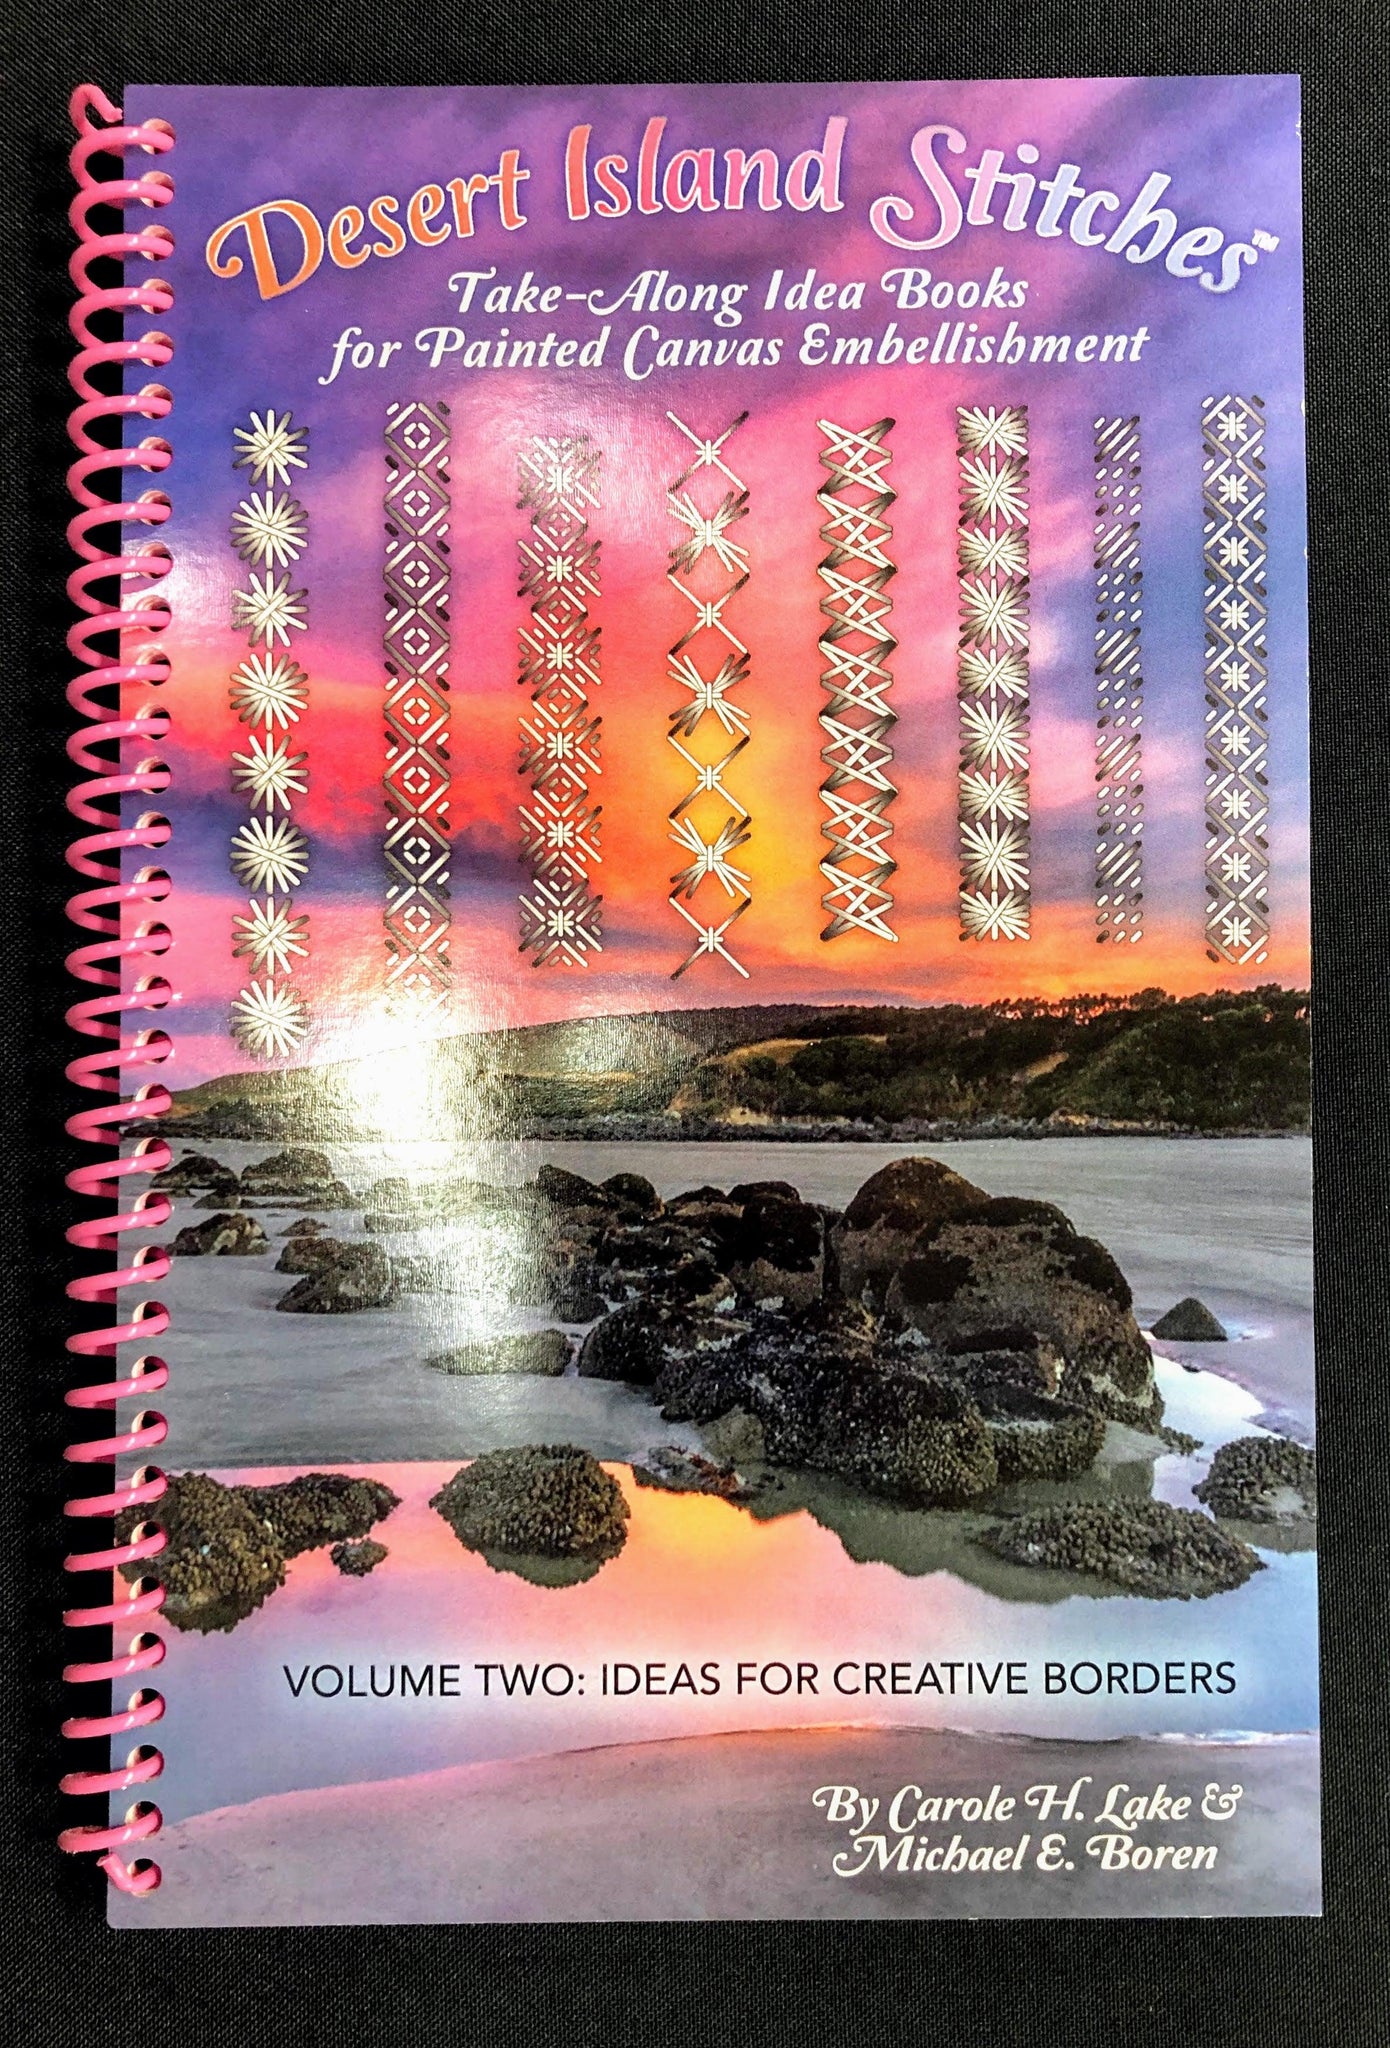 Desert Island Stitches, Take-Along Idea Books For Painted Canvas Embellishment - Family Arts Needlework Shop